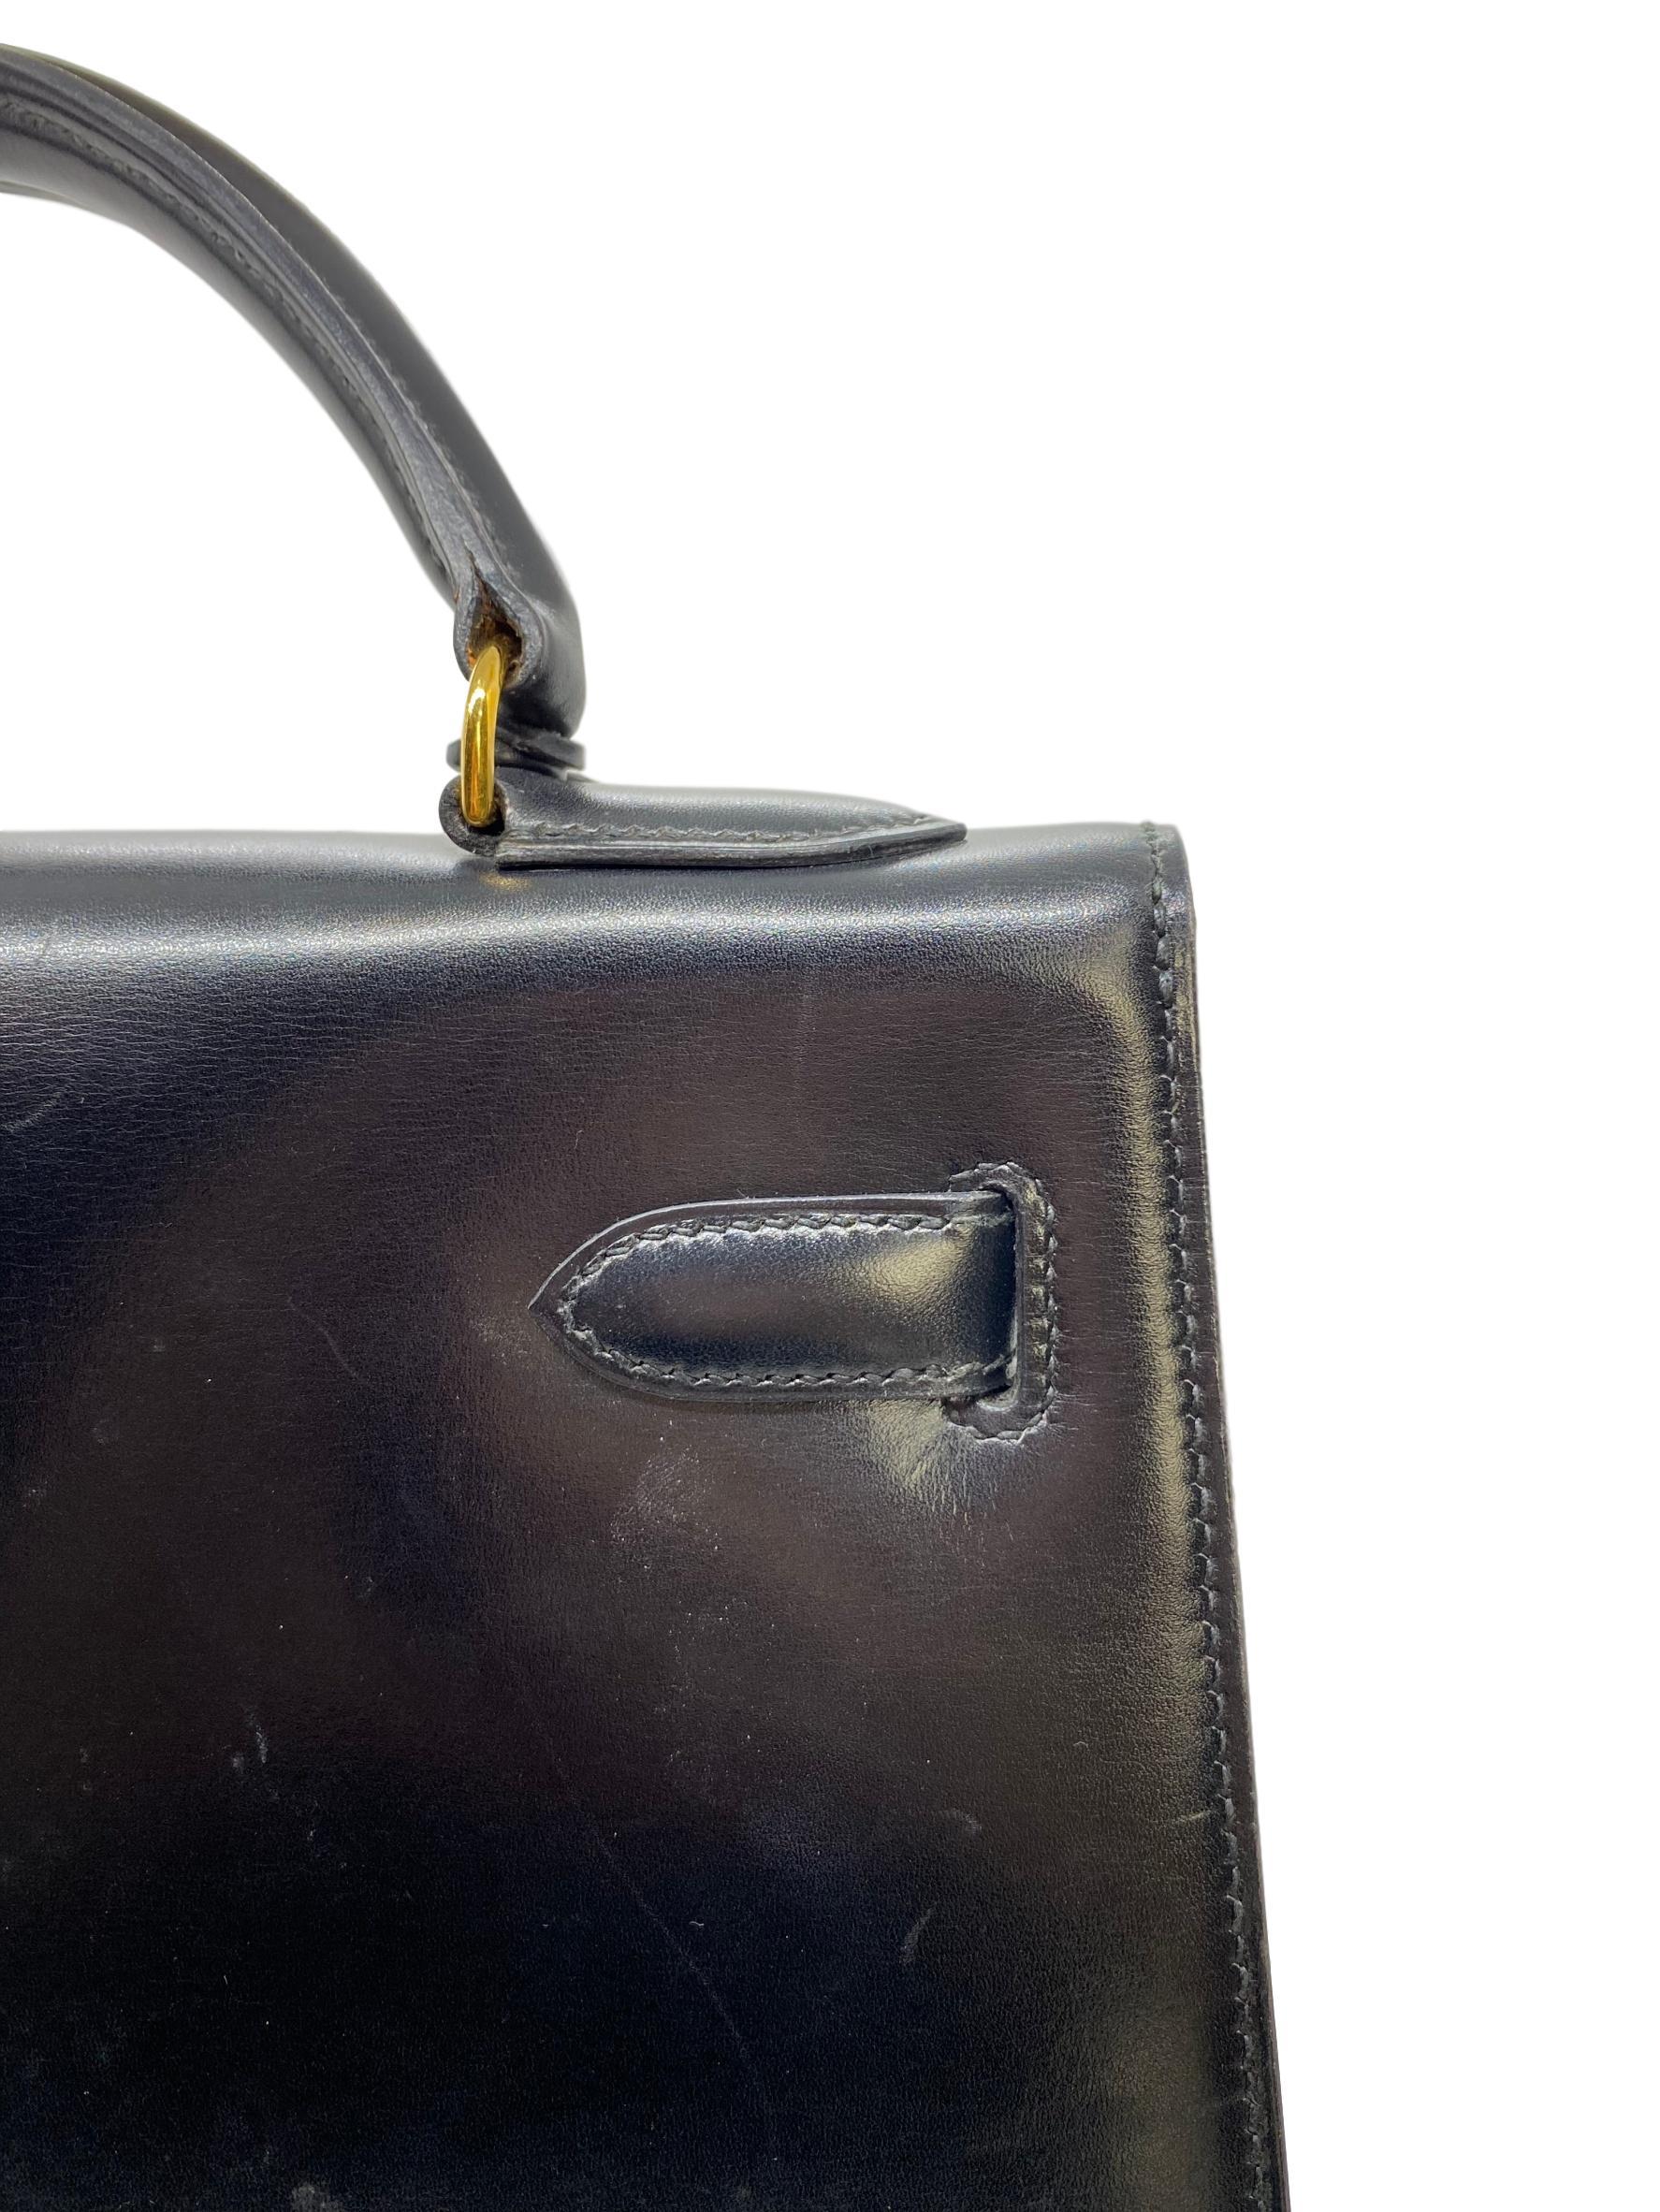 Hermes Vintage Kelly Handbag Noir Black Box Calf with Gold Hardware 32, 1991. 7